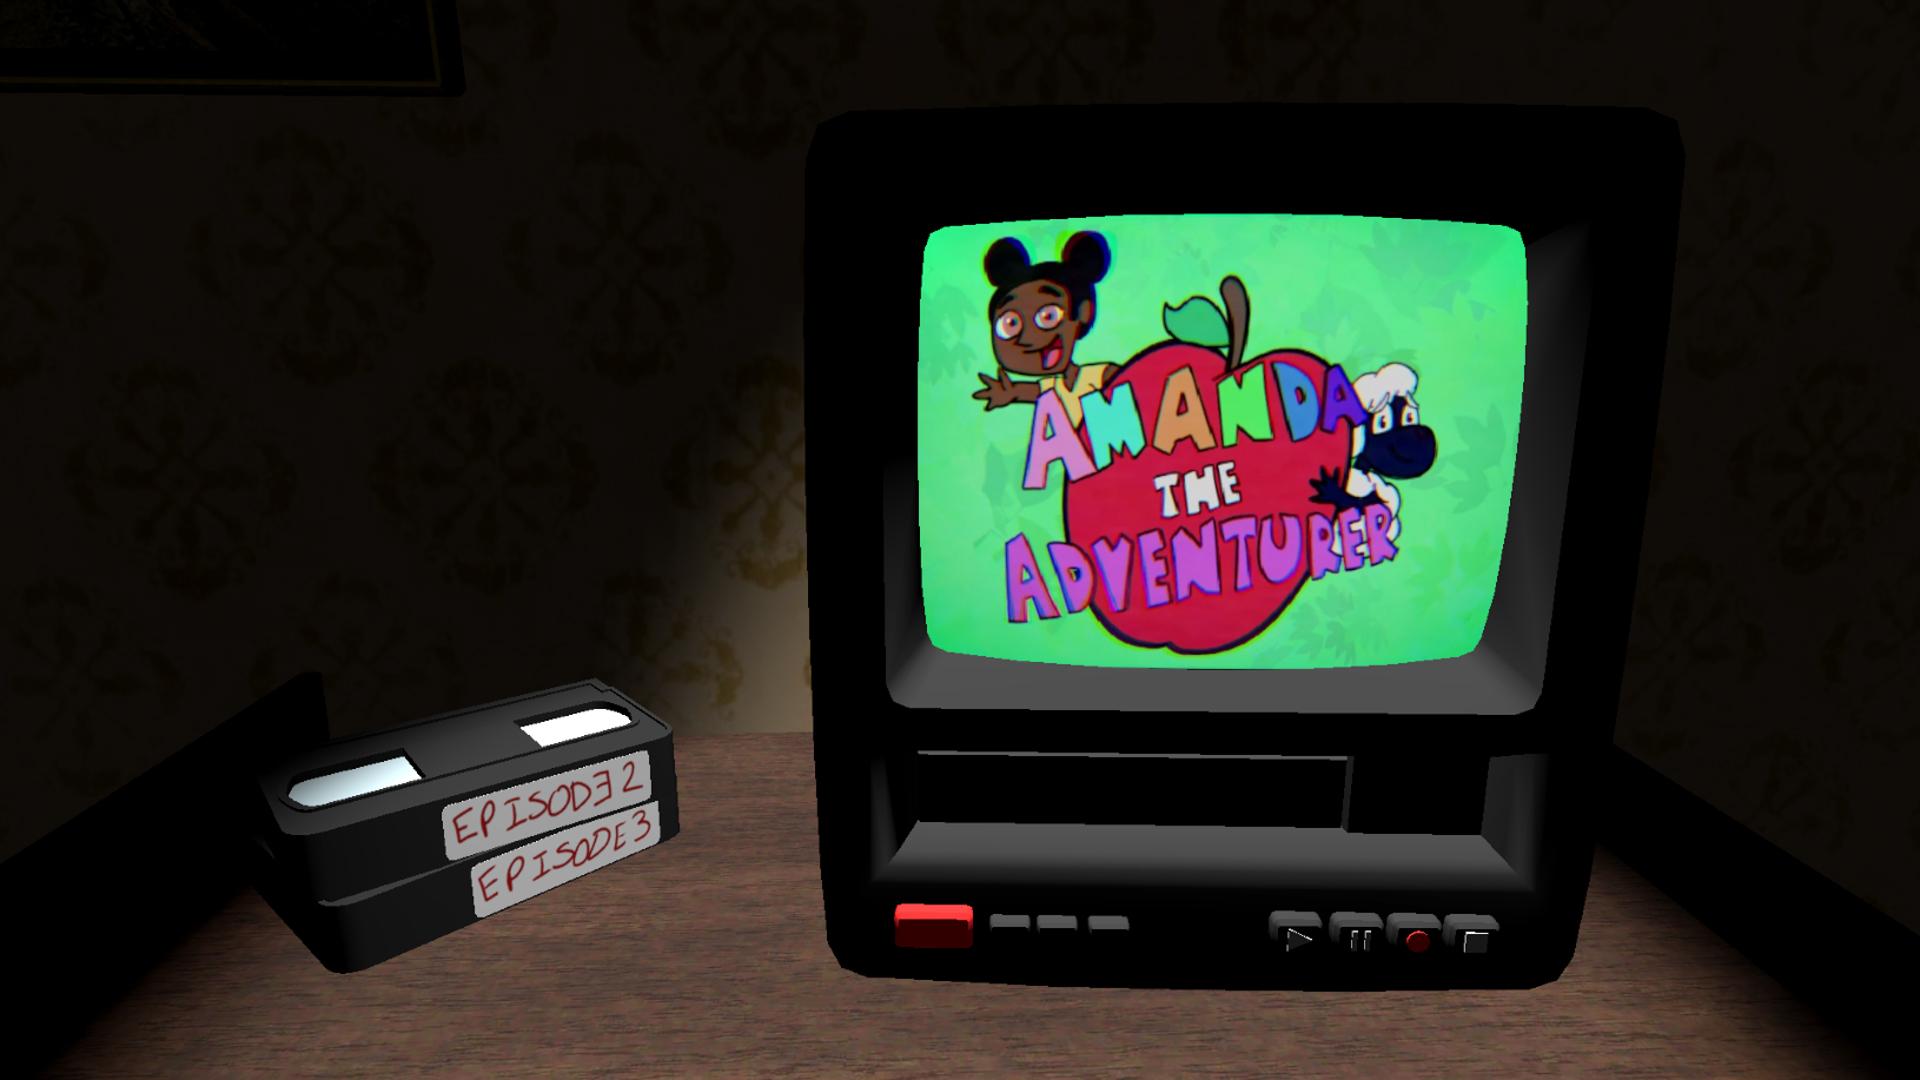 Download Amanda The Adventure Companion App Free on PC (Emulator